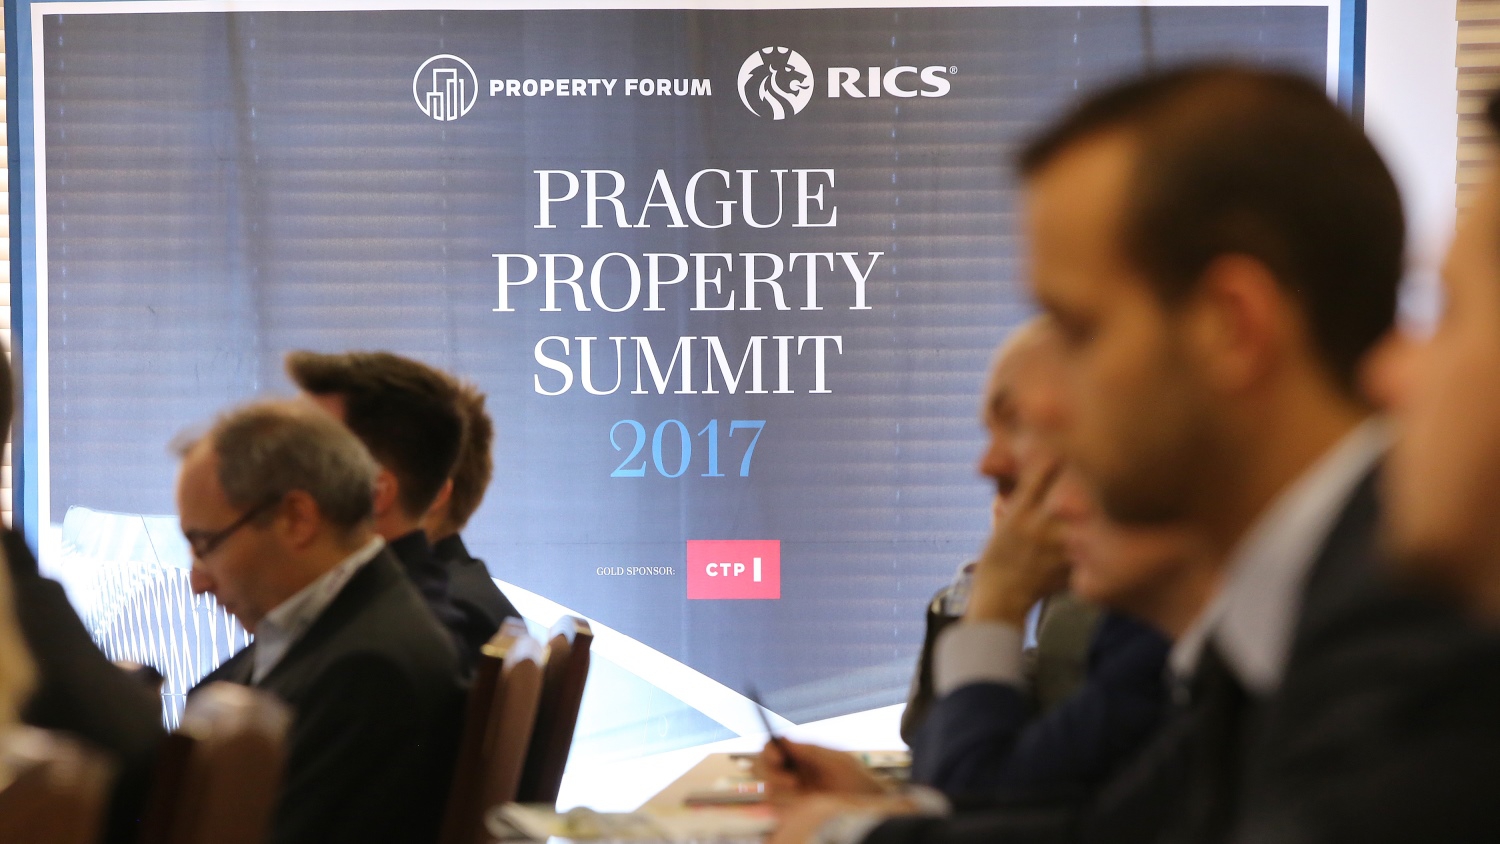 News Article CEE conference Czech Republic investment Prague Prague Property Summit Property Forum report